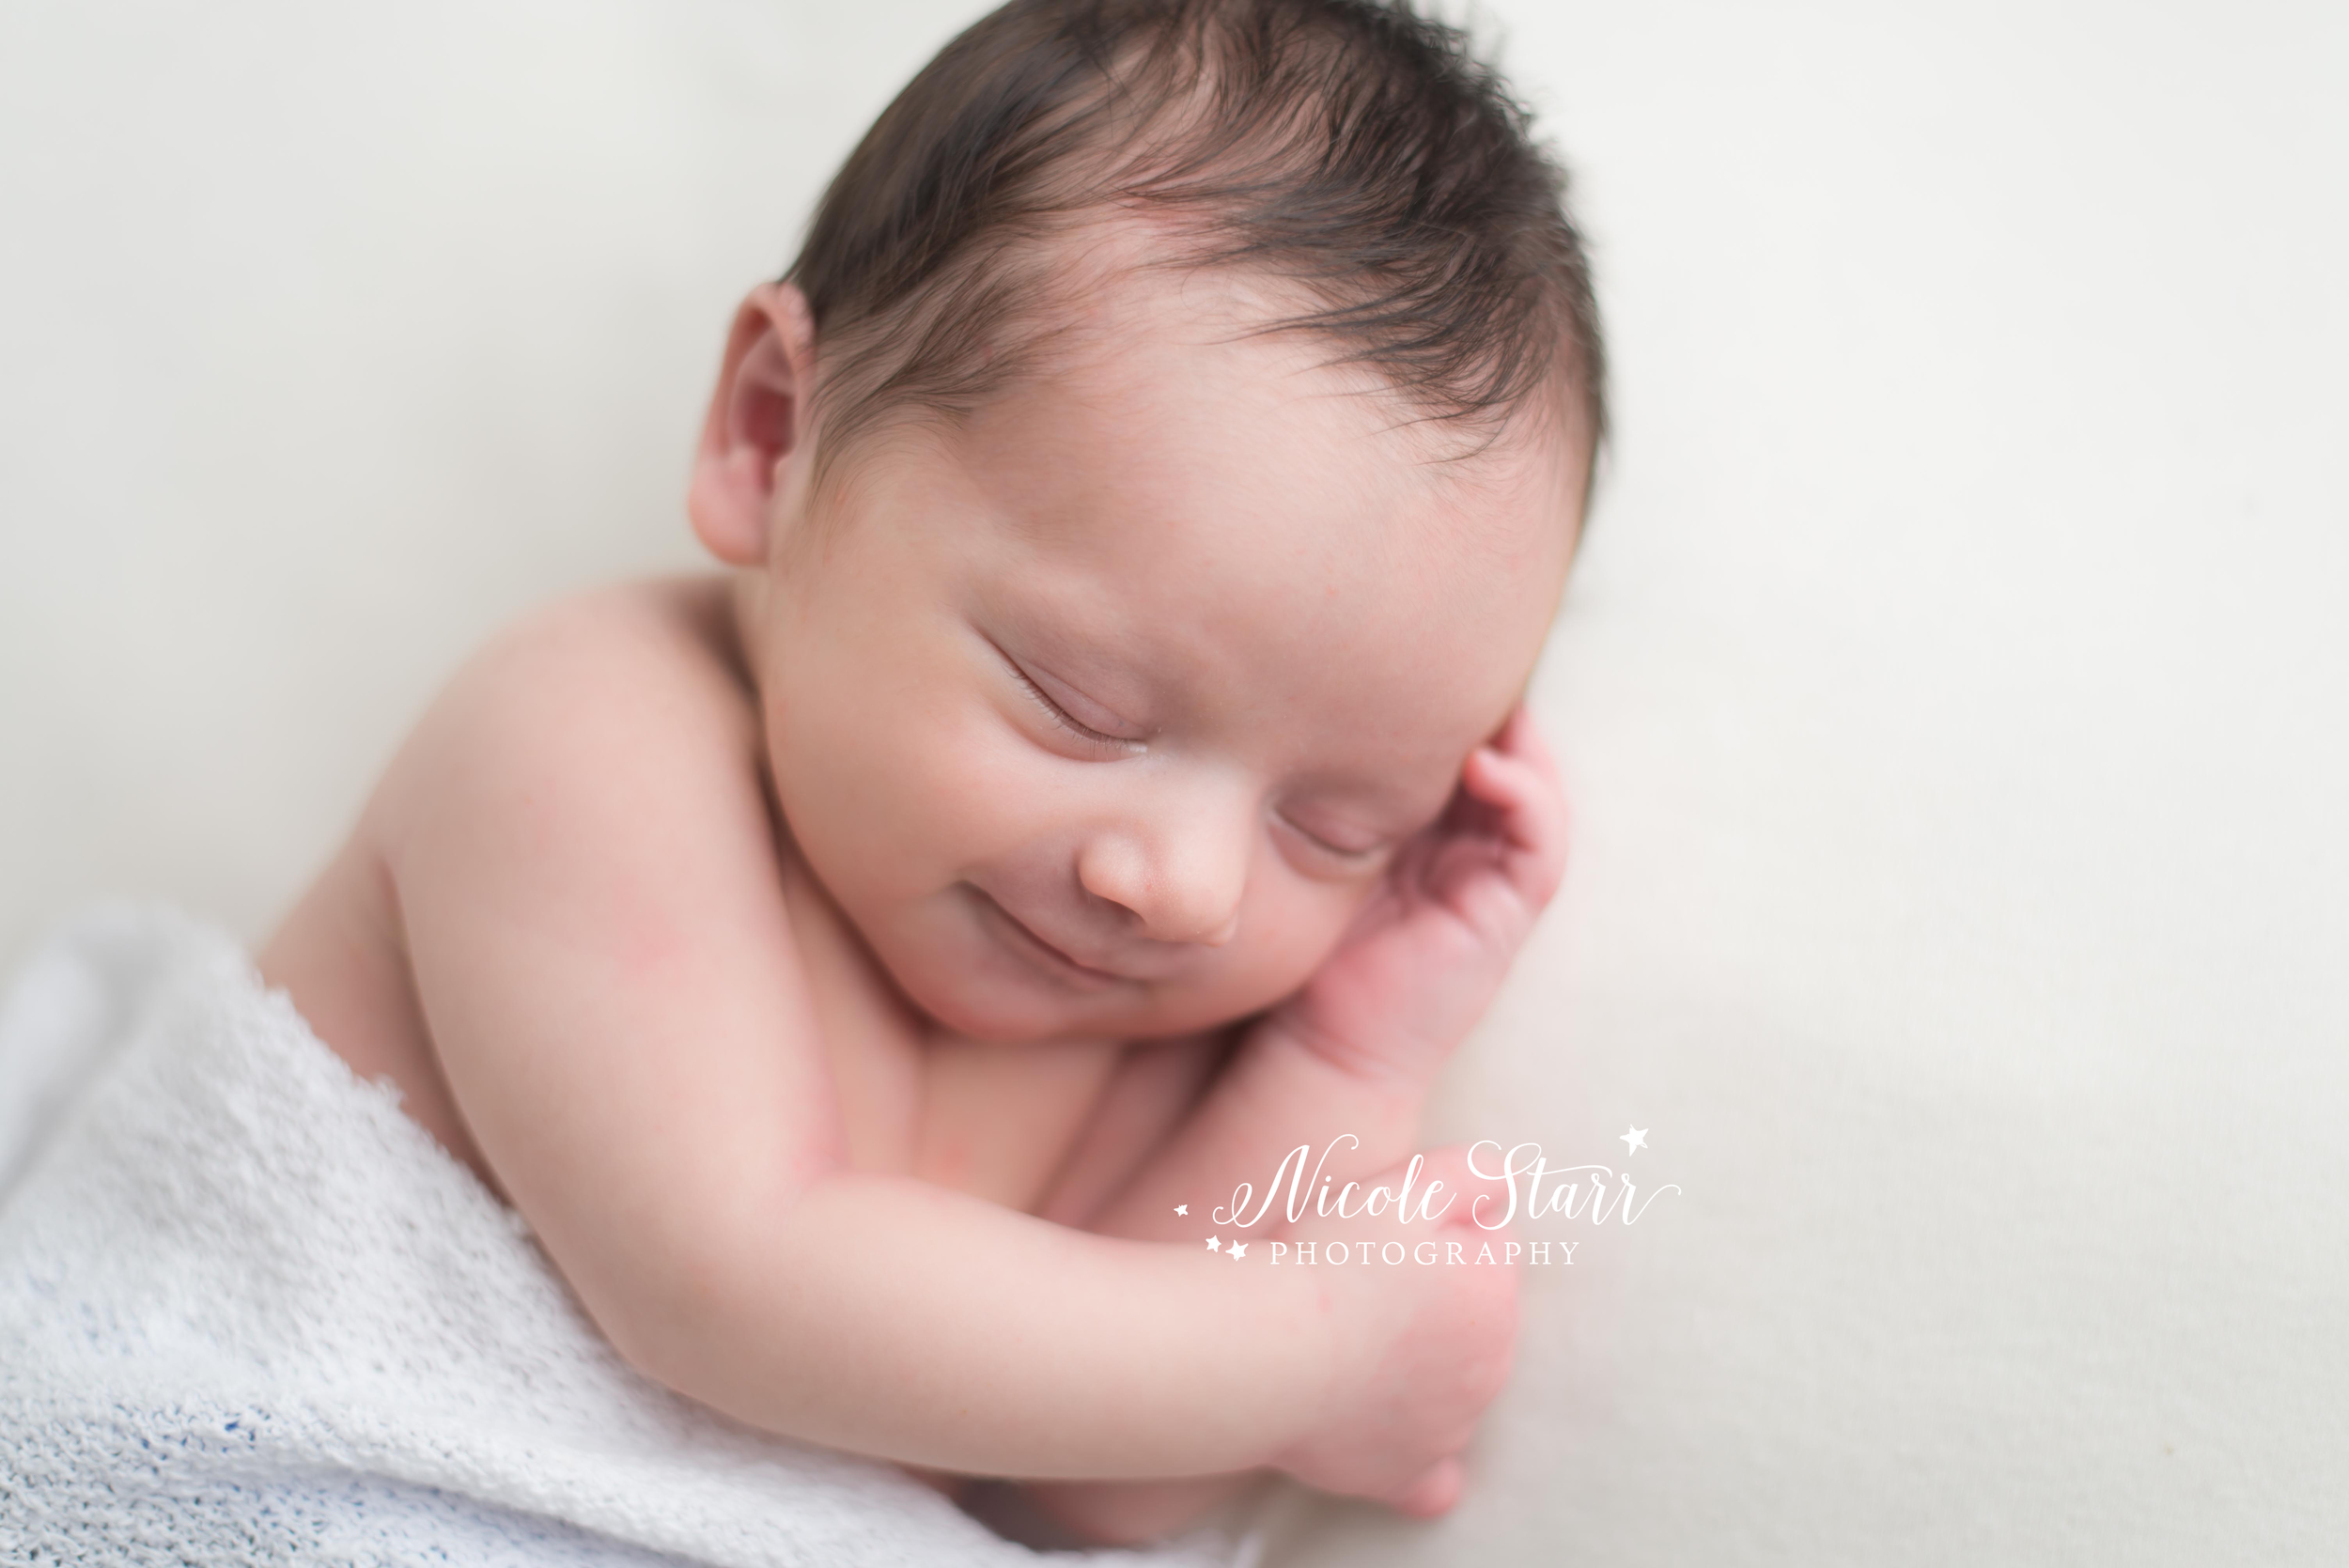 baby smile saratoga albany newborn photographer nicole starr photography-30.jpg